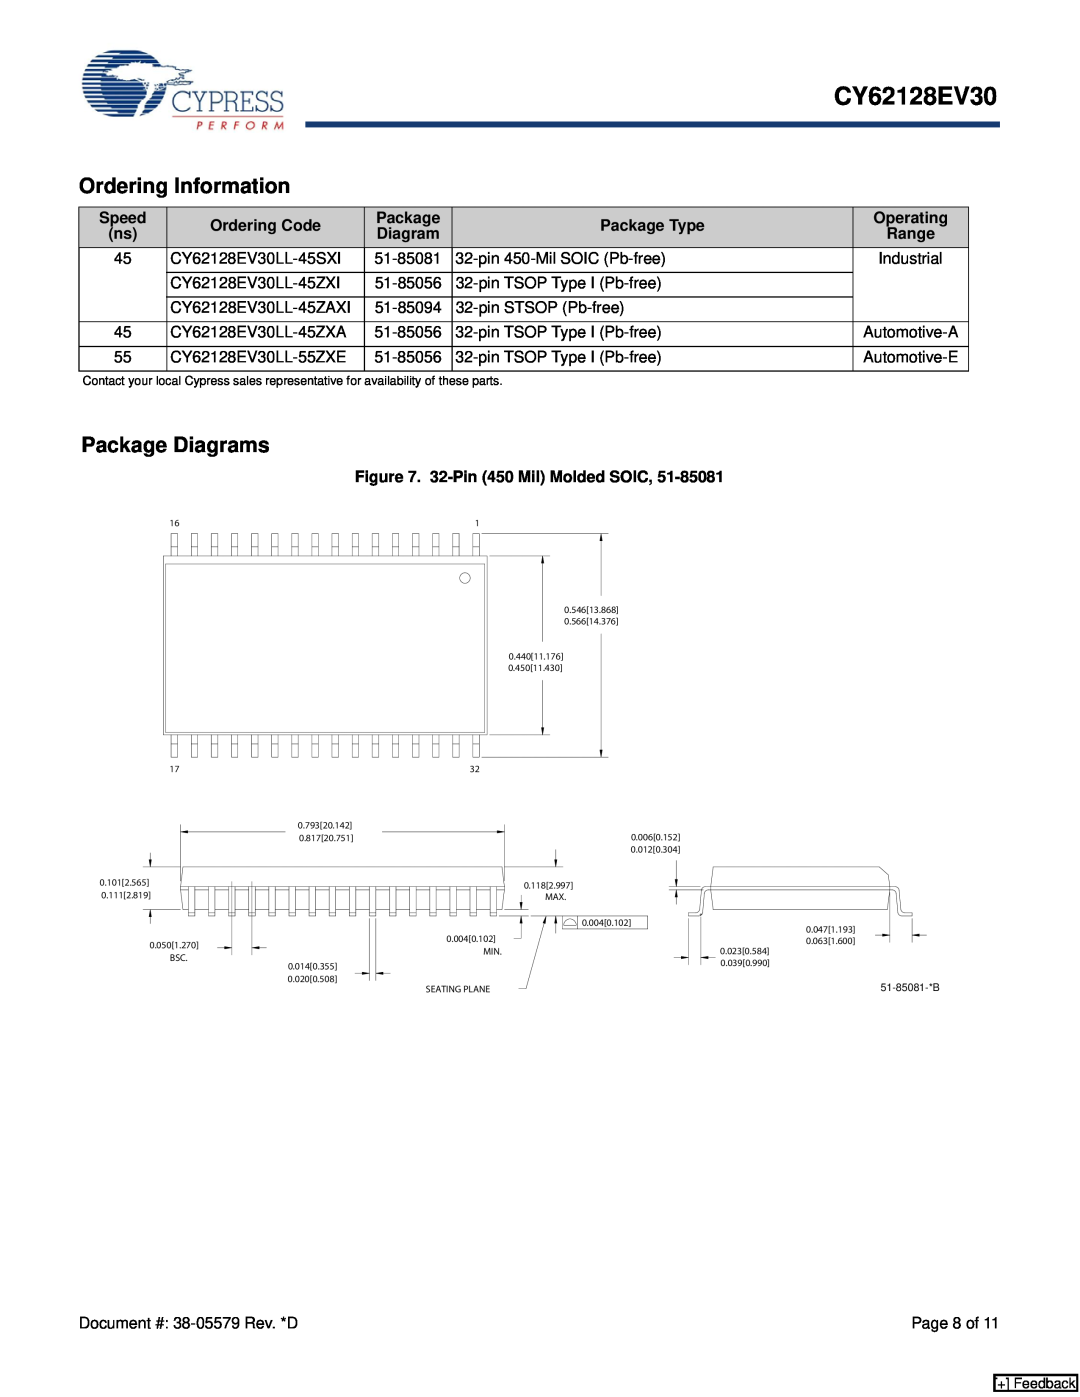 Cypress CY62128EV30 manual Ordering Information, Package Diagrams 